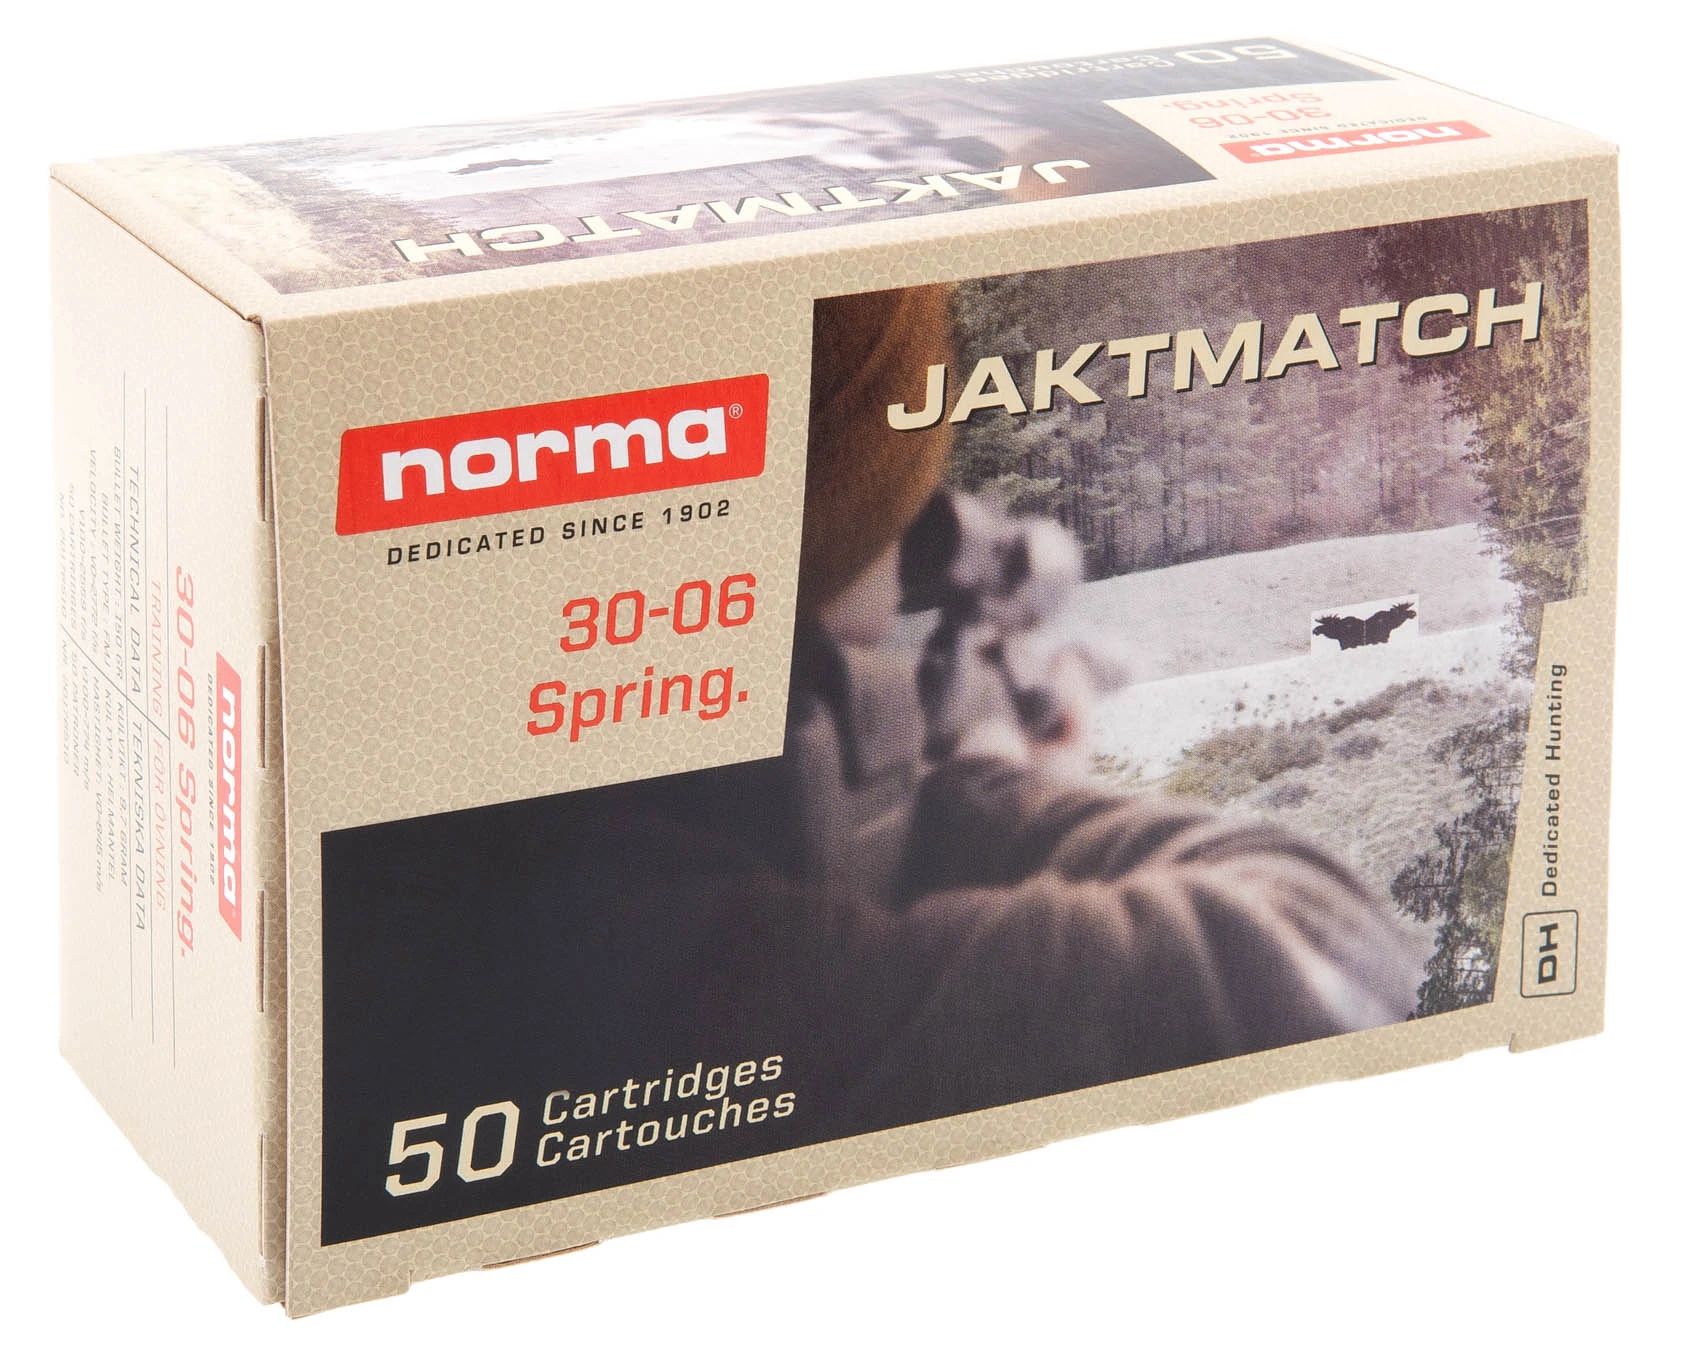 Norma Jaktmatch 30-06 50 Cartridges cartouches. Norma 9.7 FMJ Jaktmatch. Гильзы Norma. Калибр 30 06 Norma.